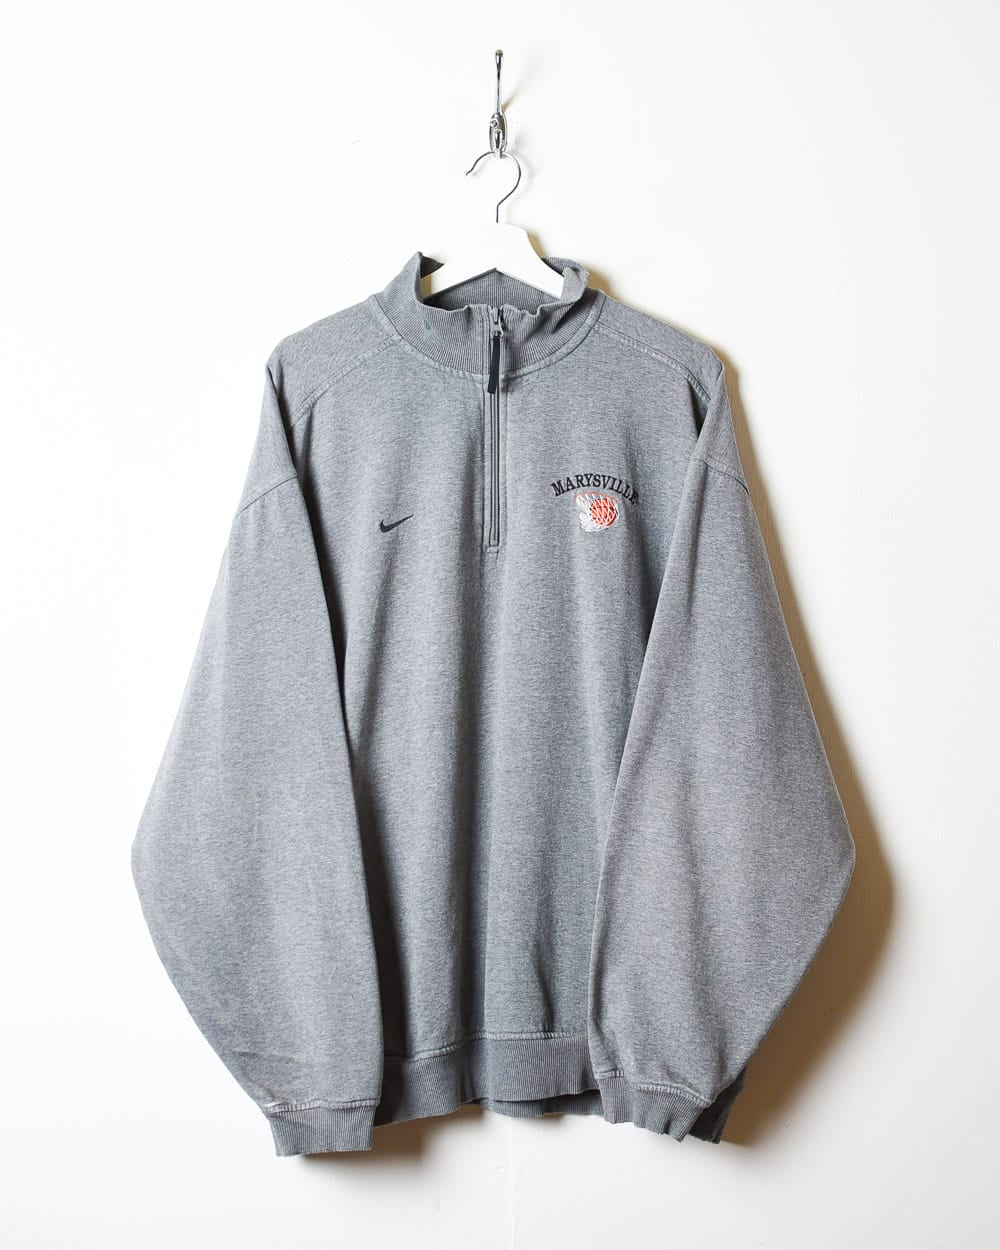 Vintage 90s Stone Nike Team Marysville Zip Sweatshirt - Cotton– Domno